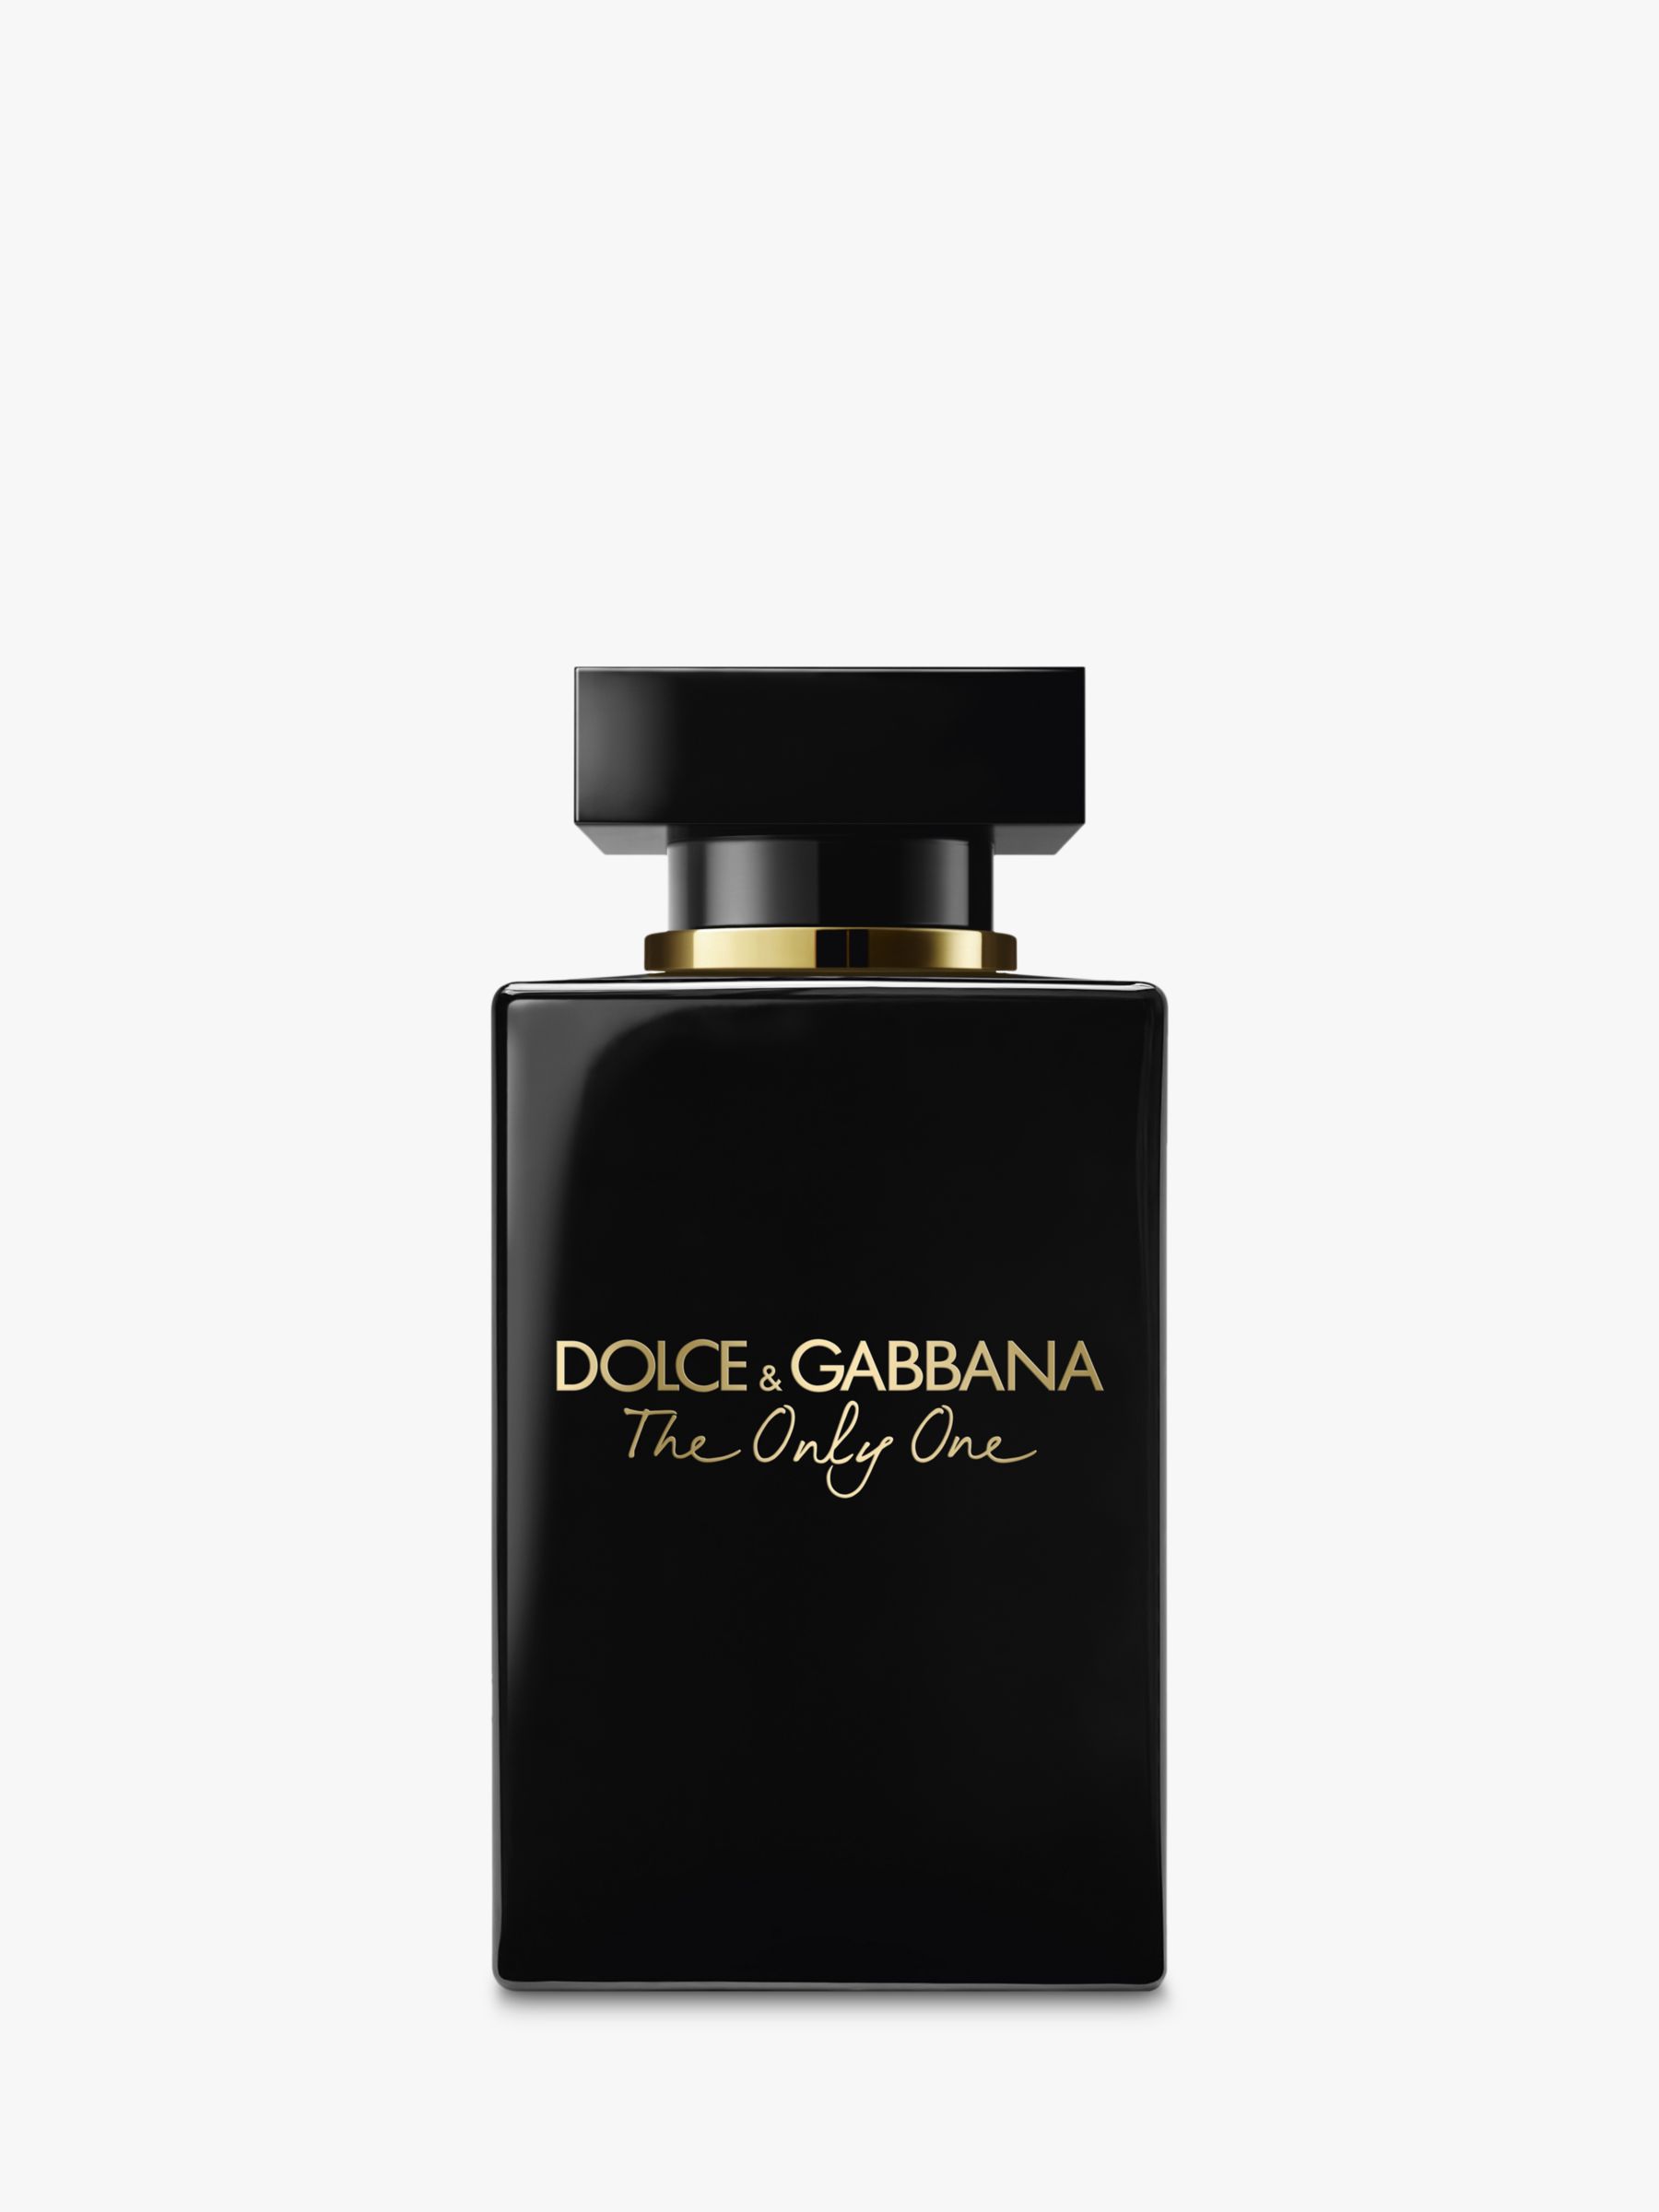 Dolce & Gabbana The Only One Eau de Parfum Intense at John Lewis & Partners